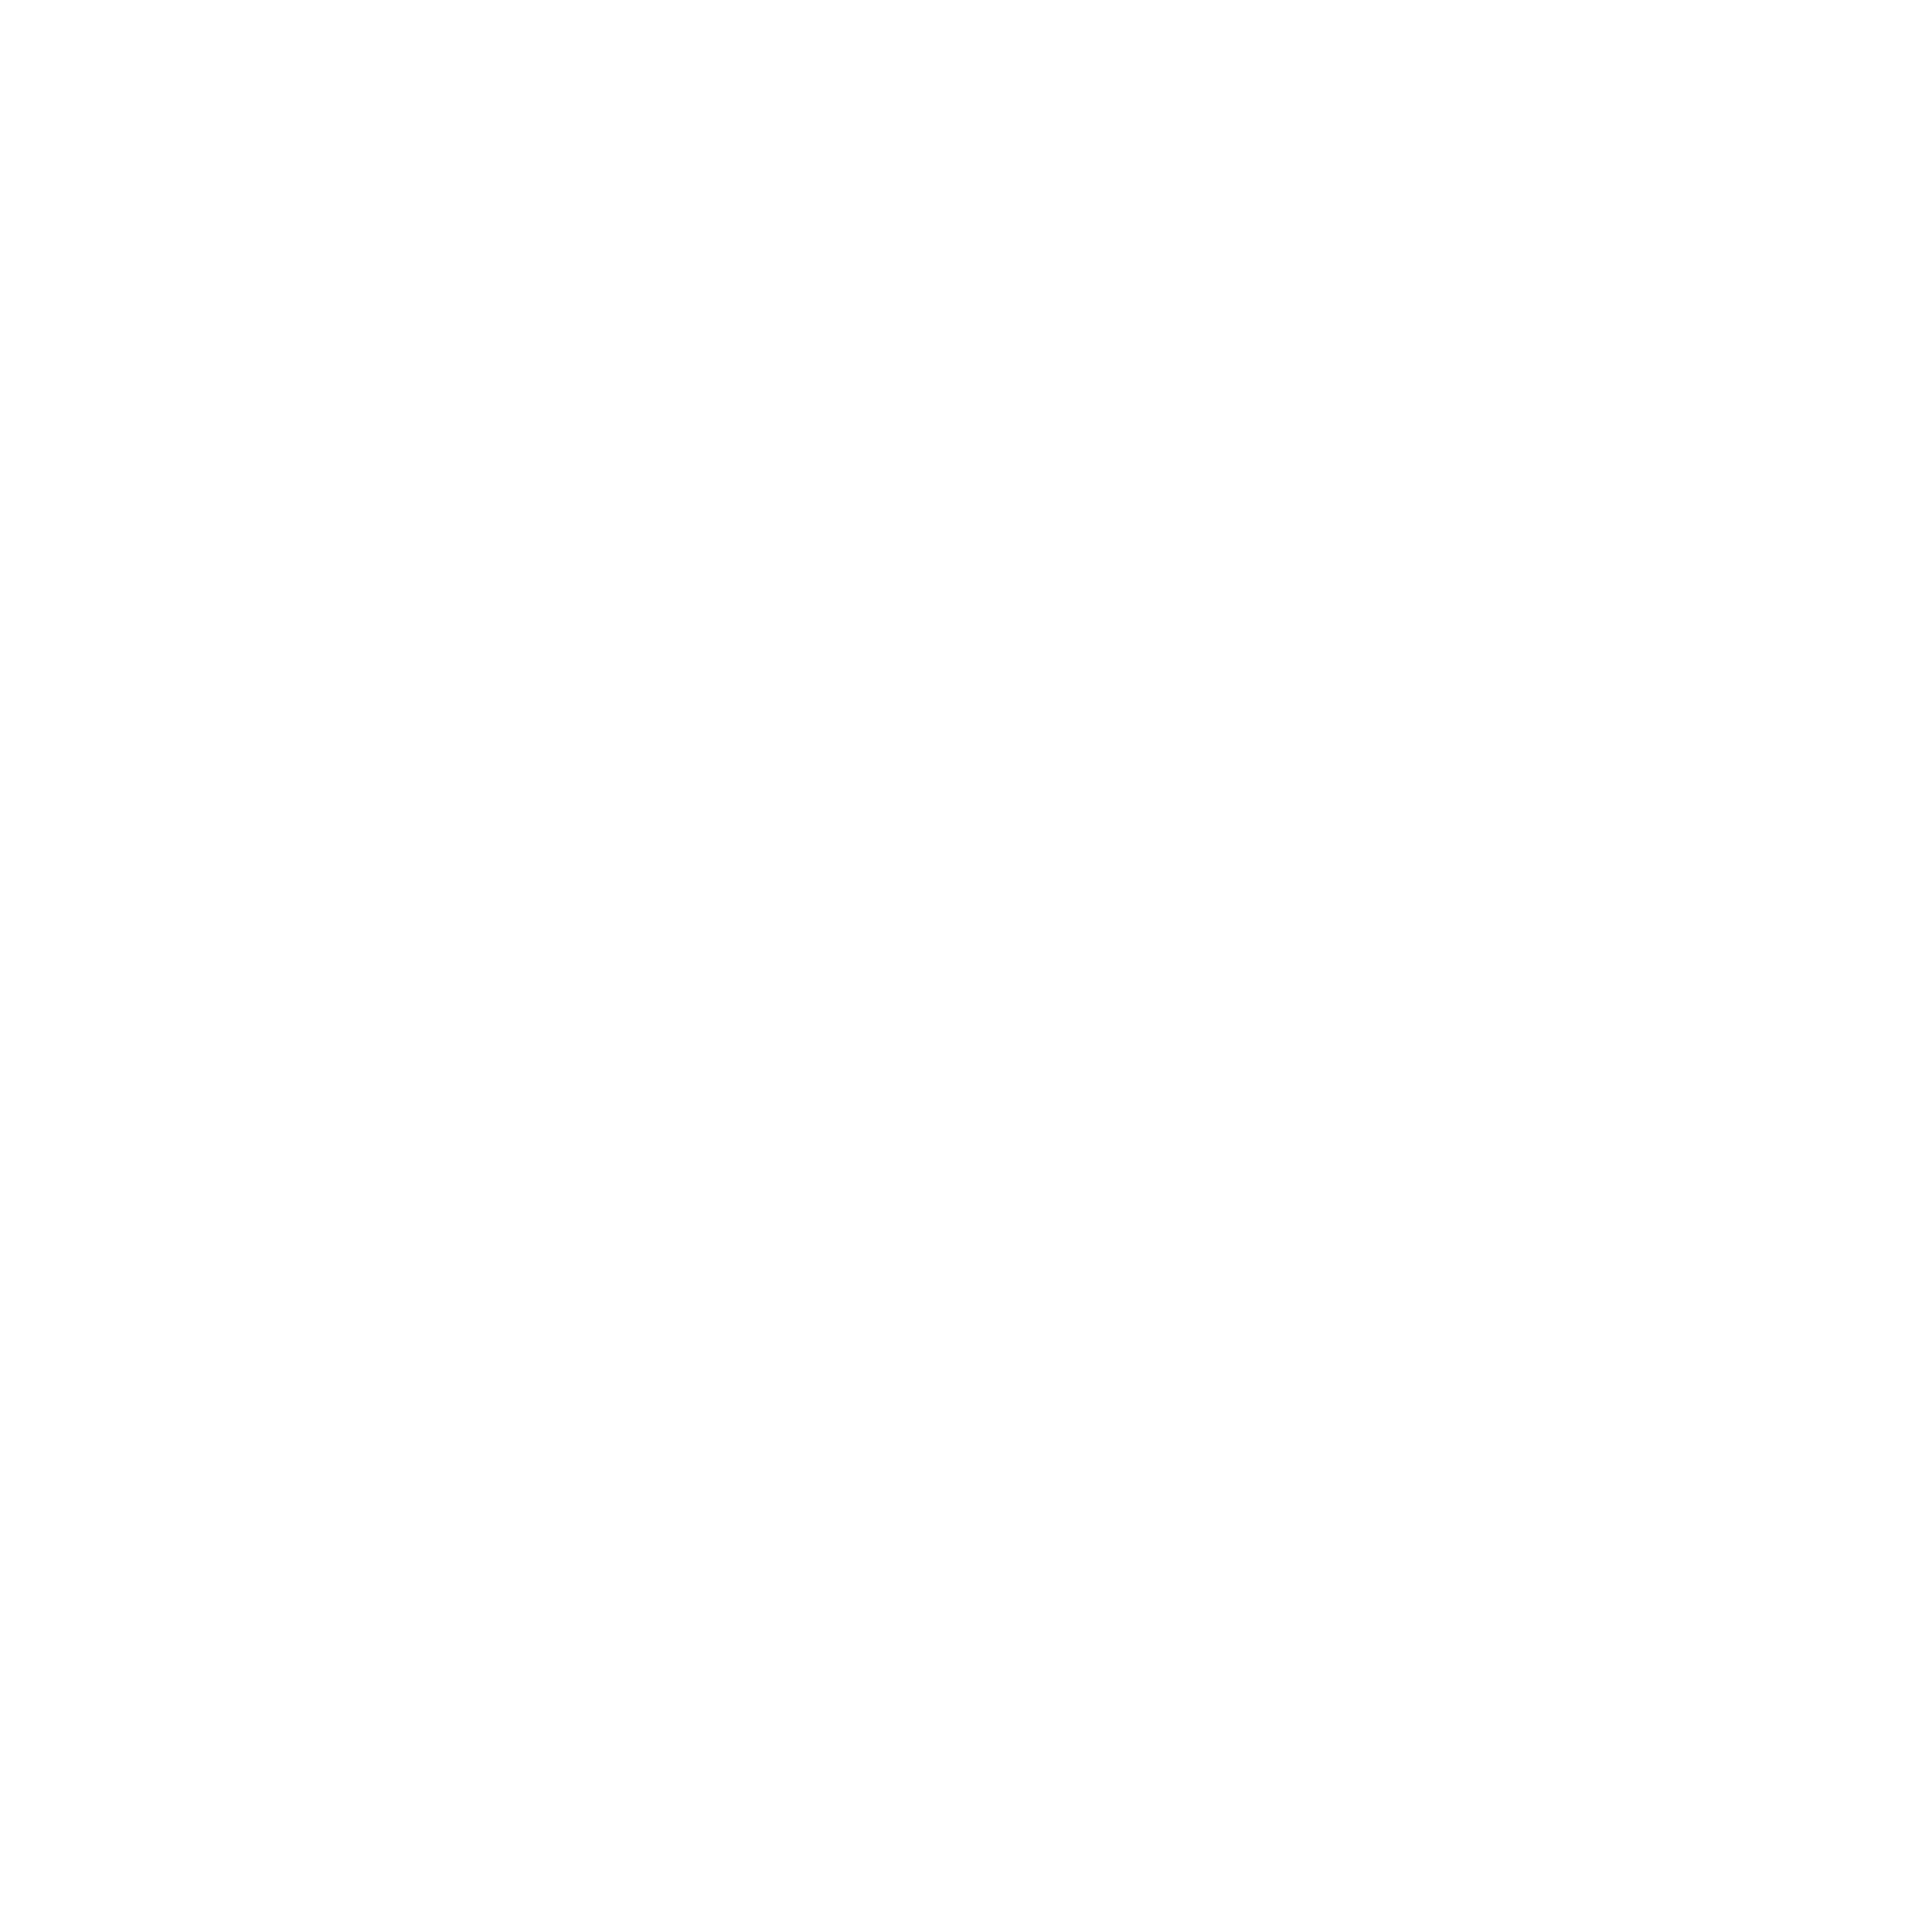 Jams cafe logo white